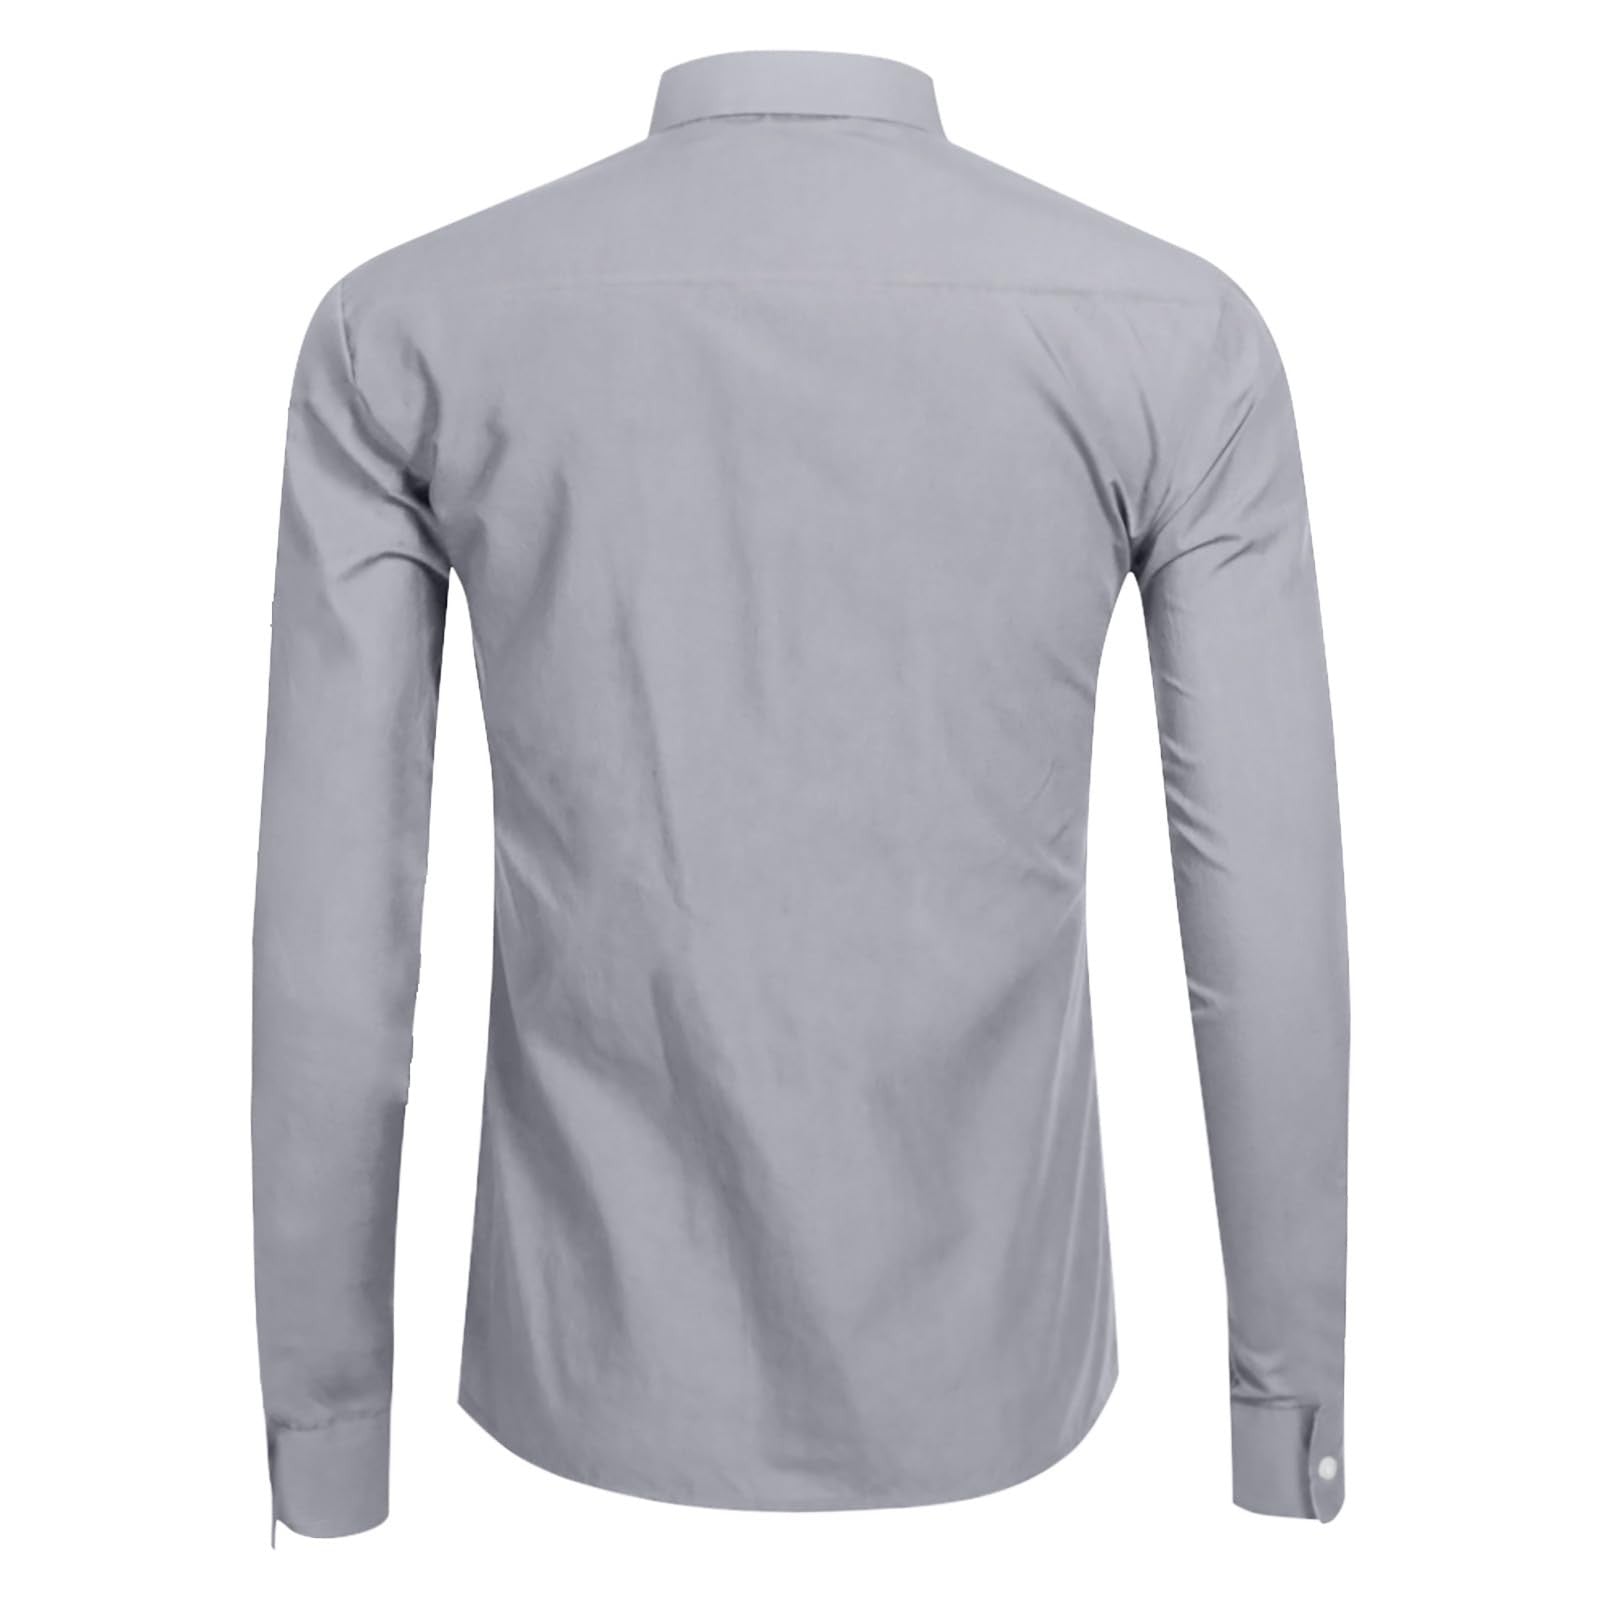 50% RABATT | Tresor Hemd™ - Einzigartiges Hemd mit Reissverschluss